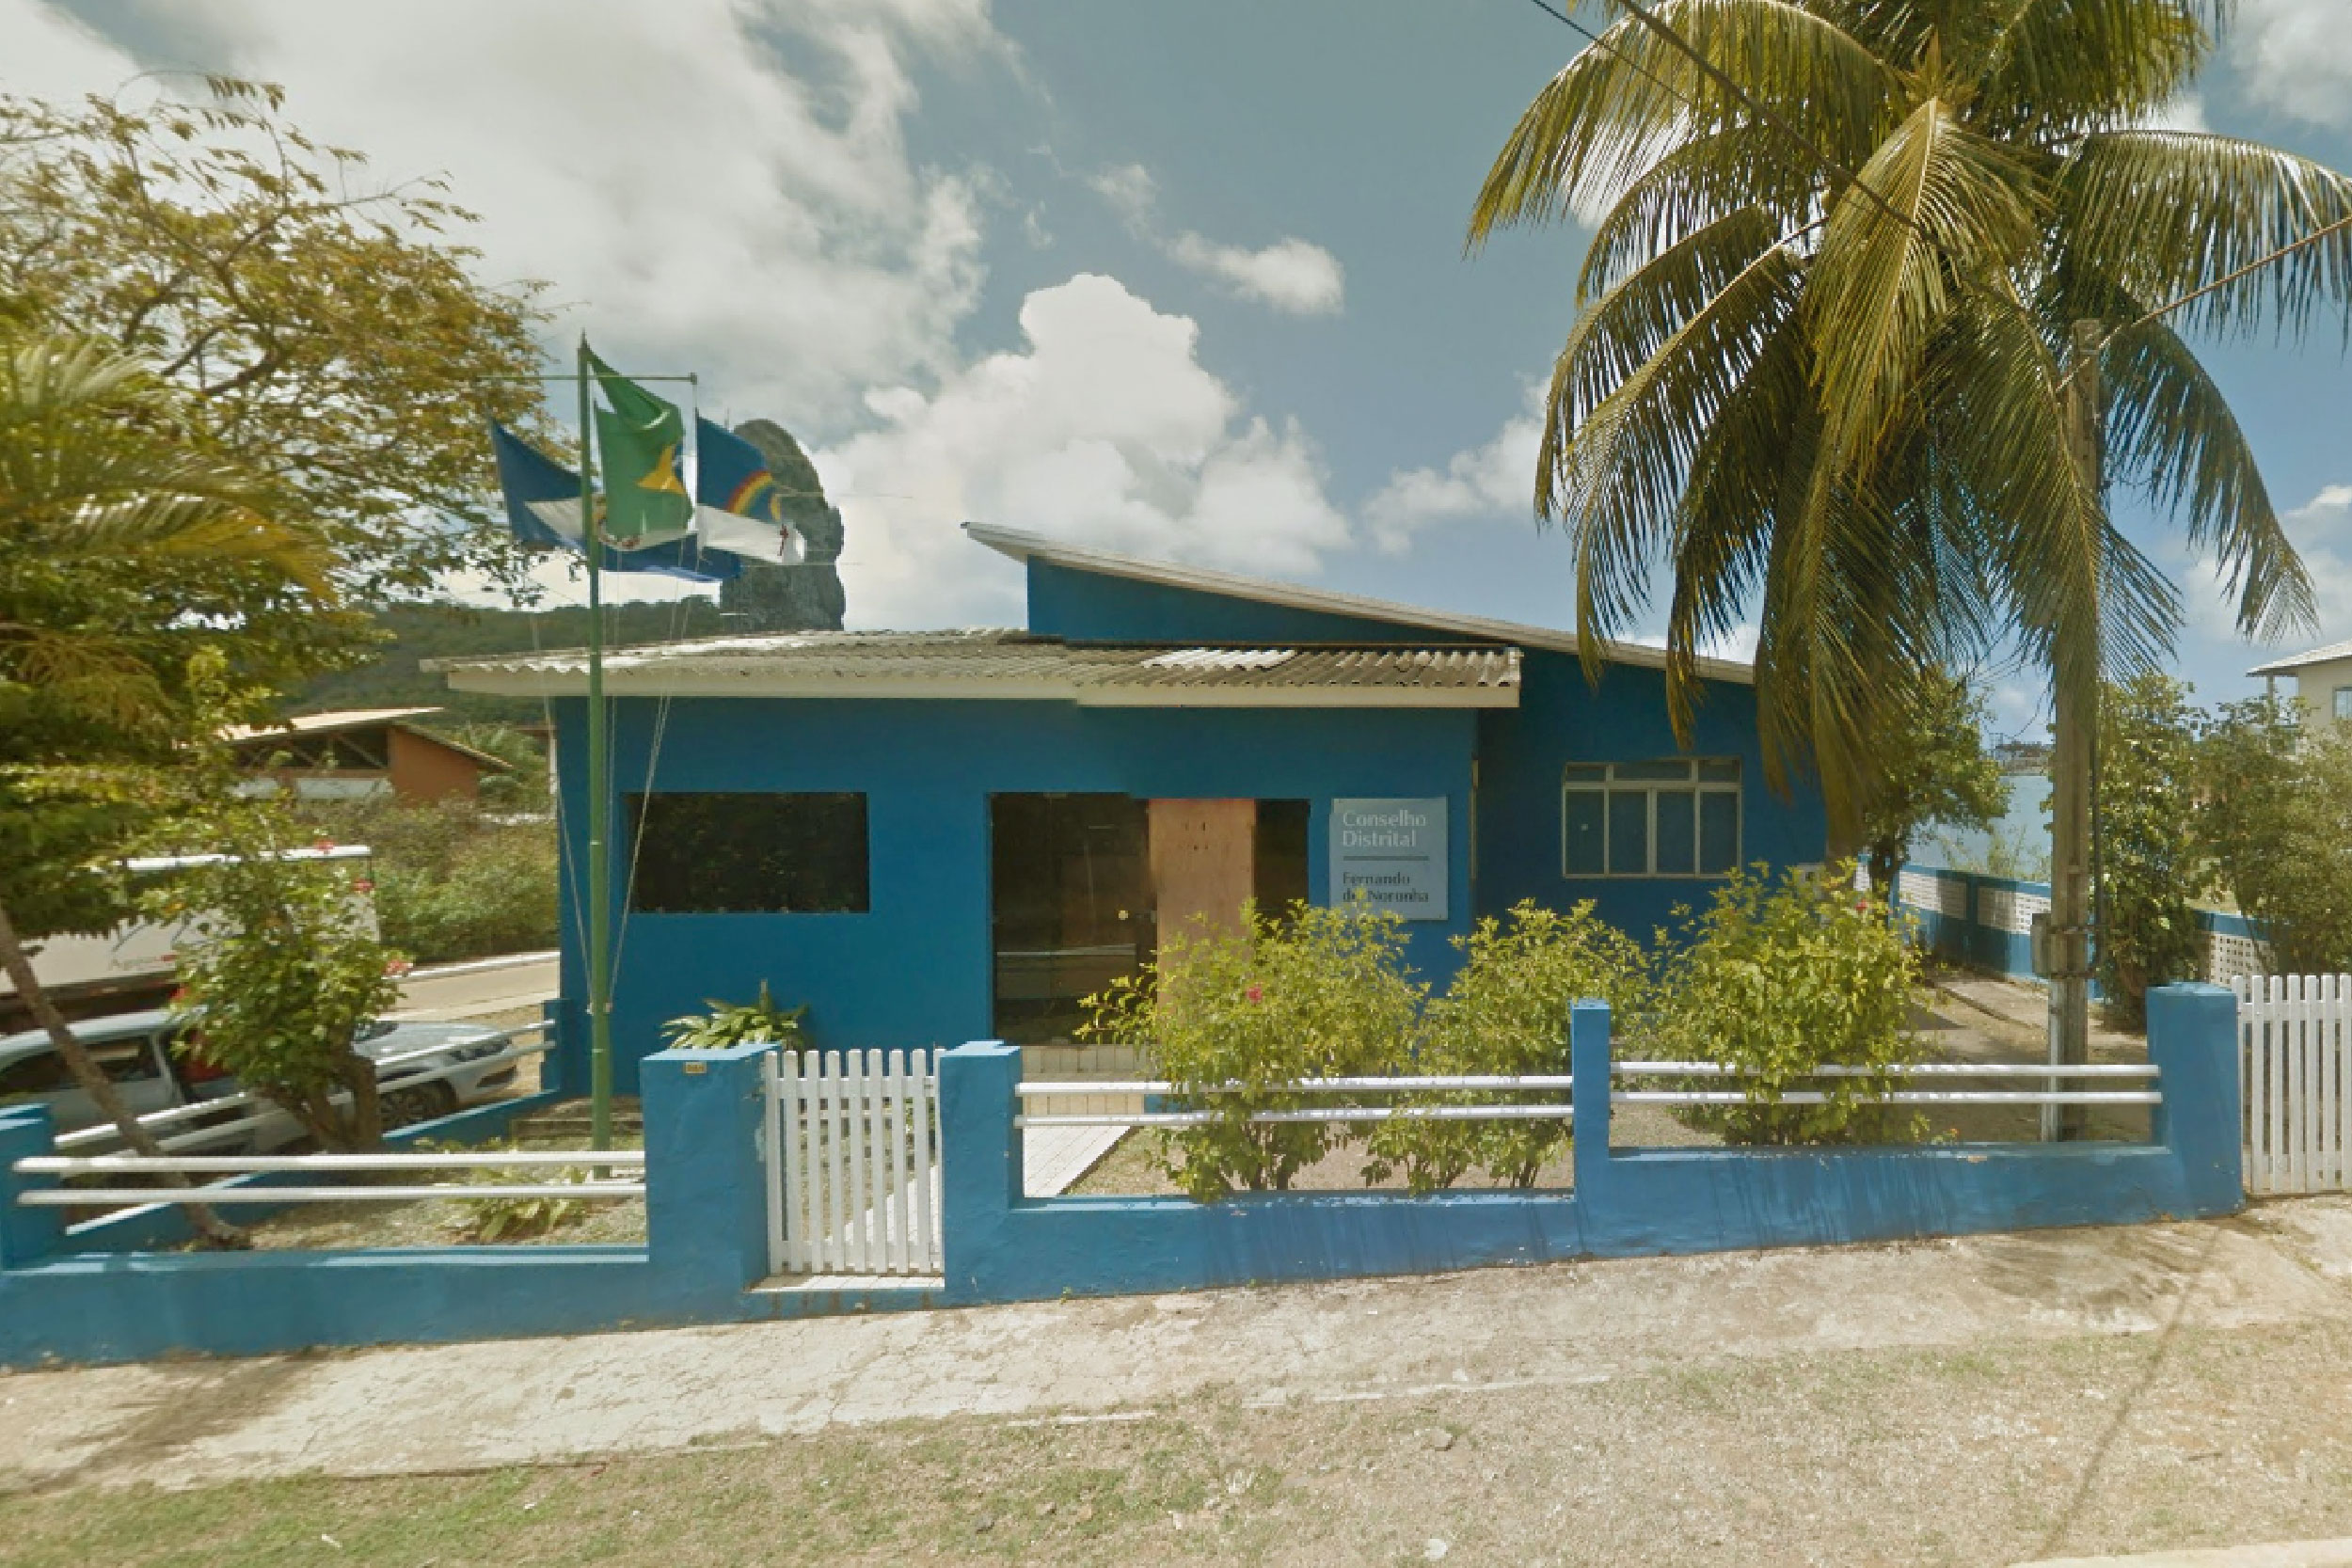 Fotografia de casa azul onde funciona o Conselho Distrital de Fernando de Noronha